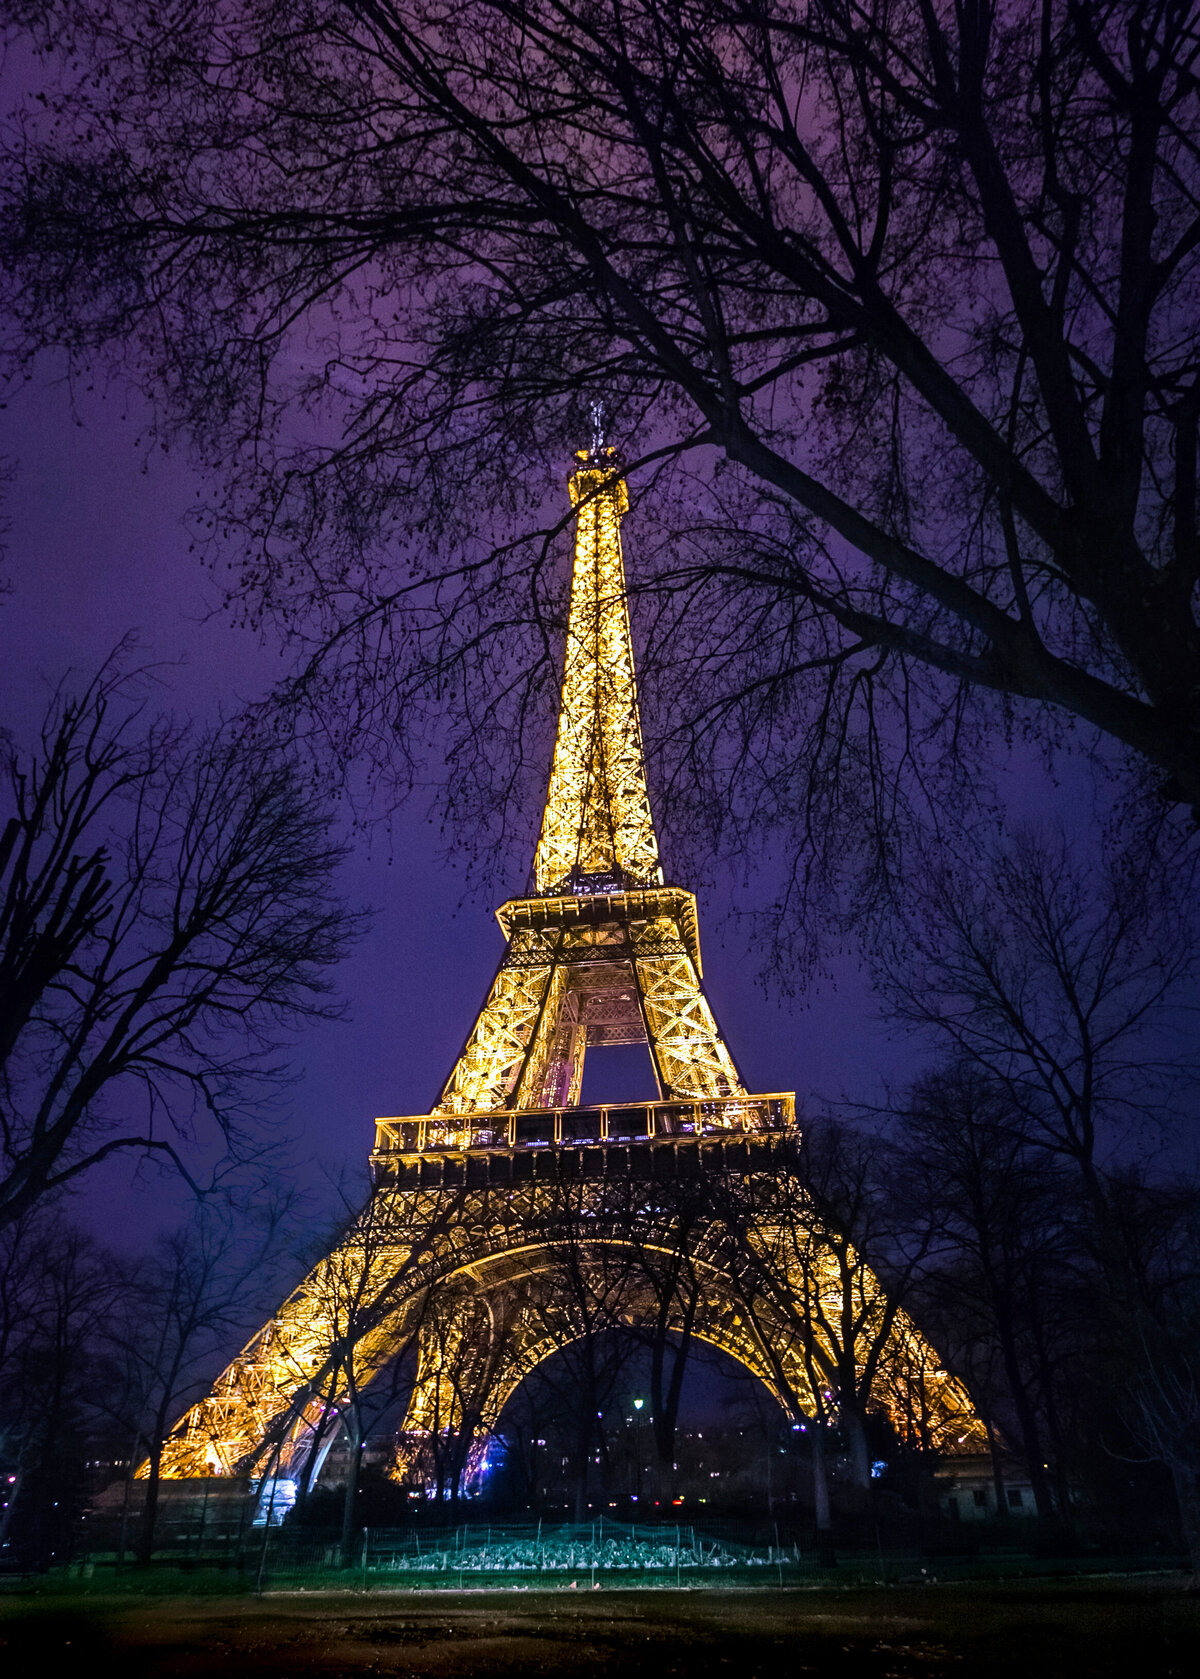 072-073-KBP-Paris-France-Eiffel-Tower-light-night